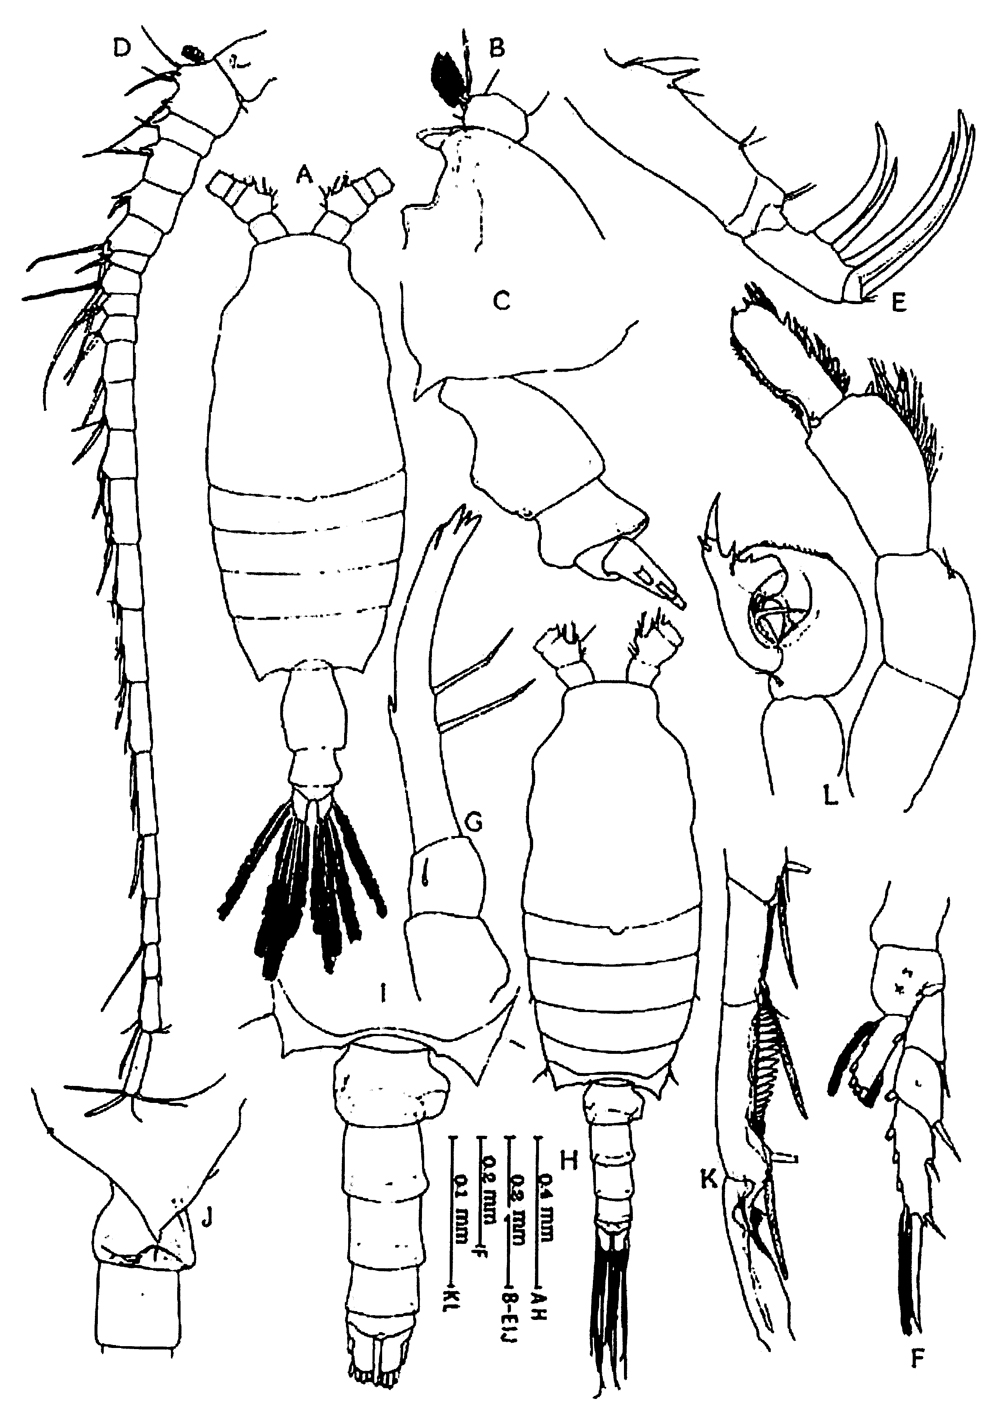 Species Candacia discaudata - Plate 6 of morphological figures